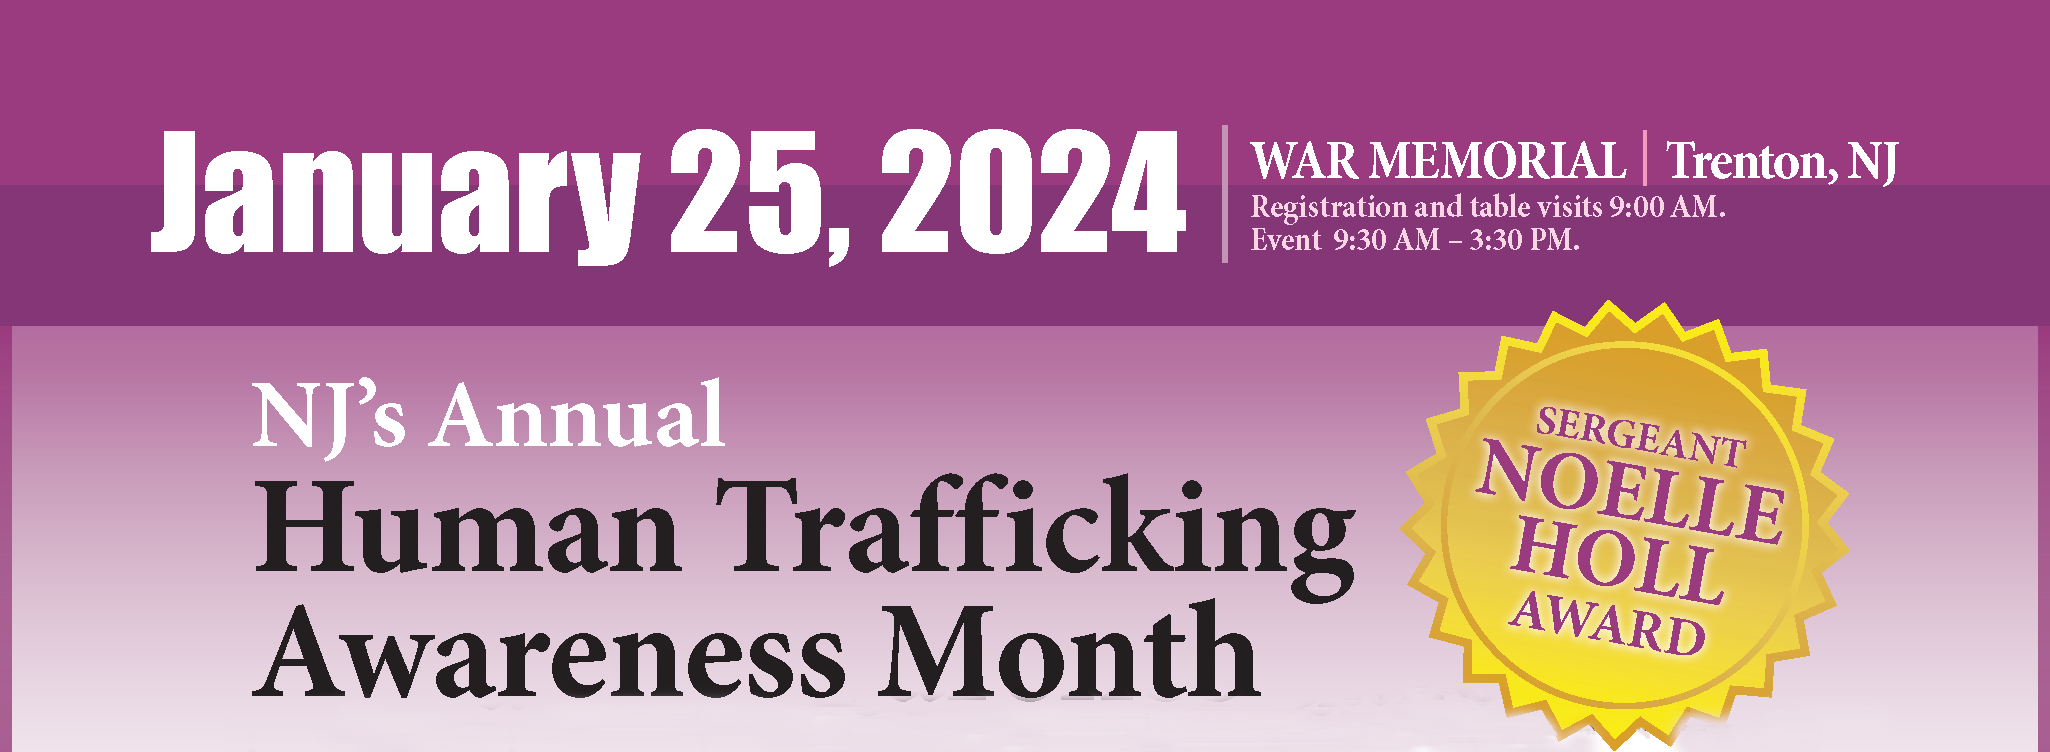 2024 Human Trafficking Awareness Event Day 